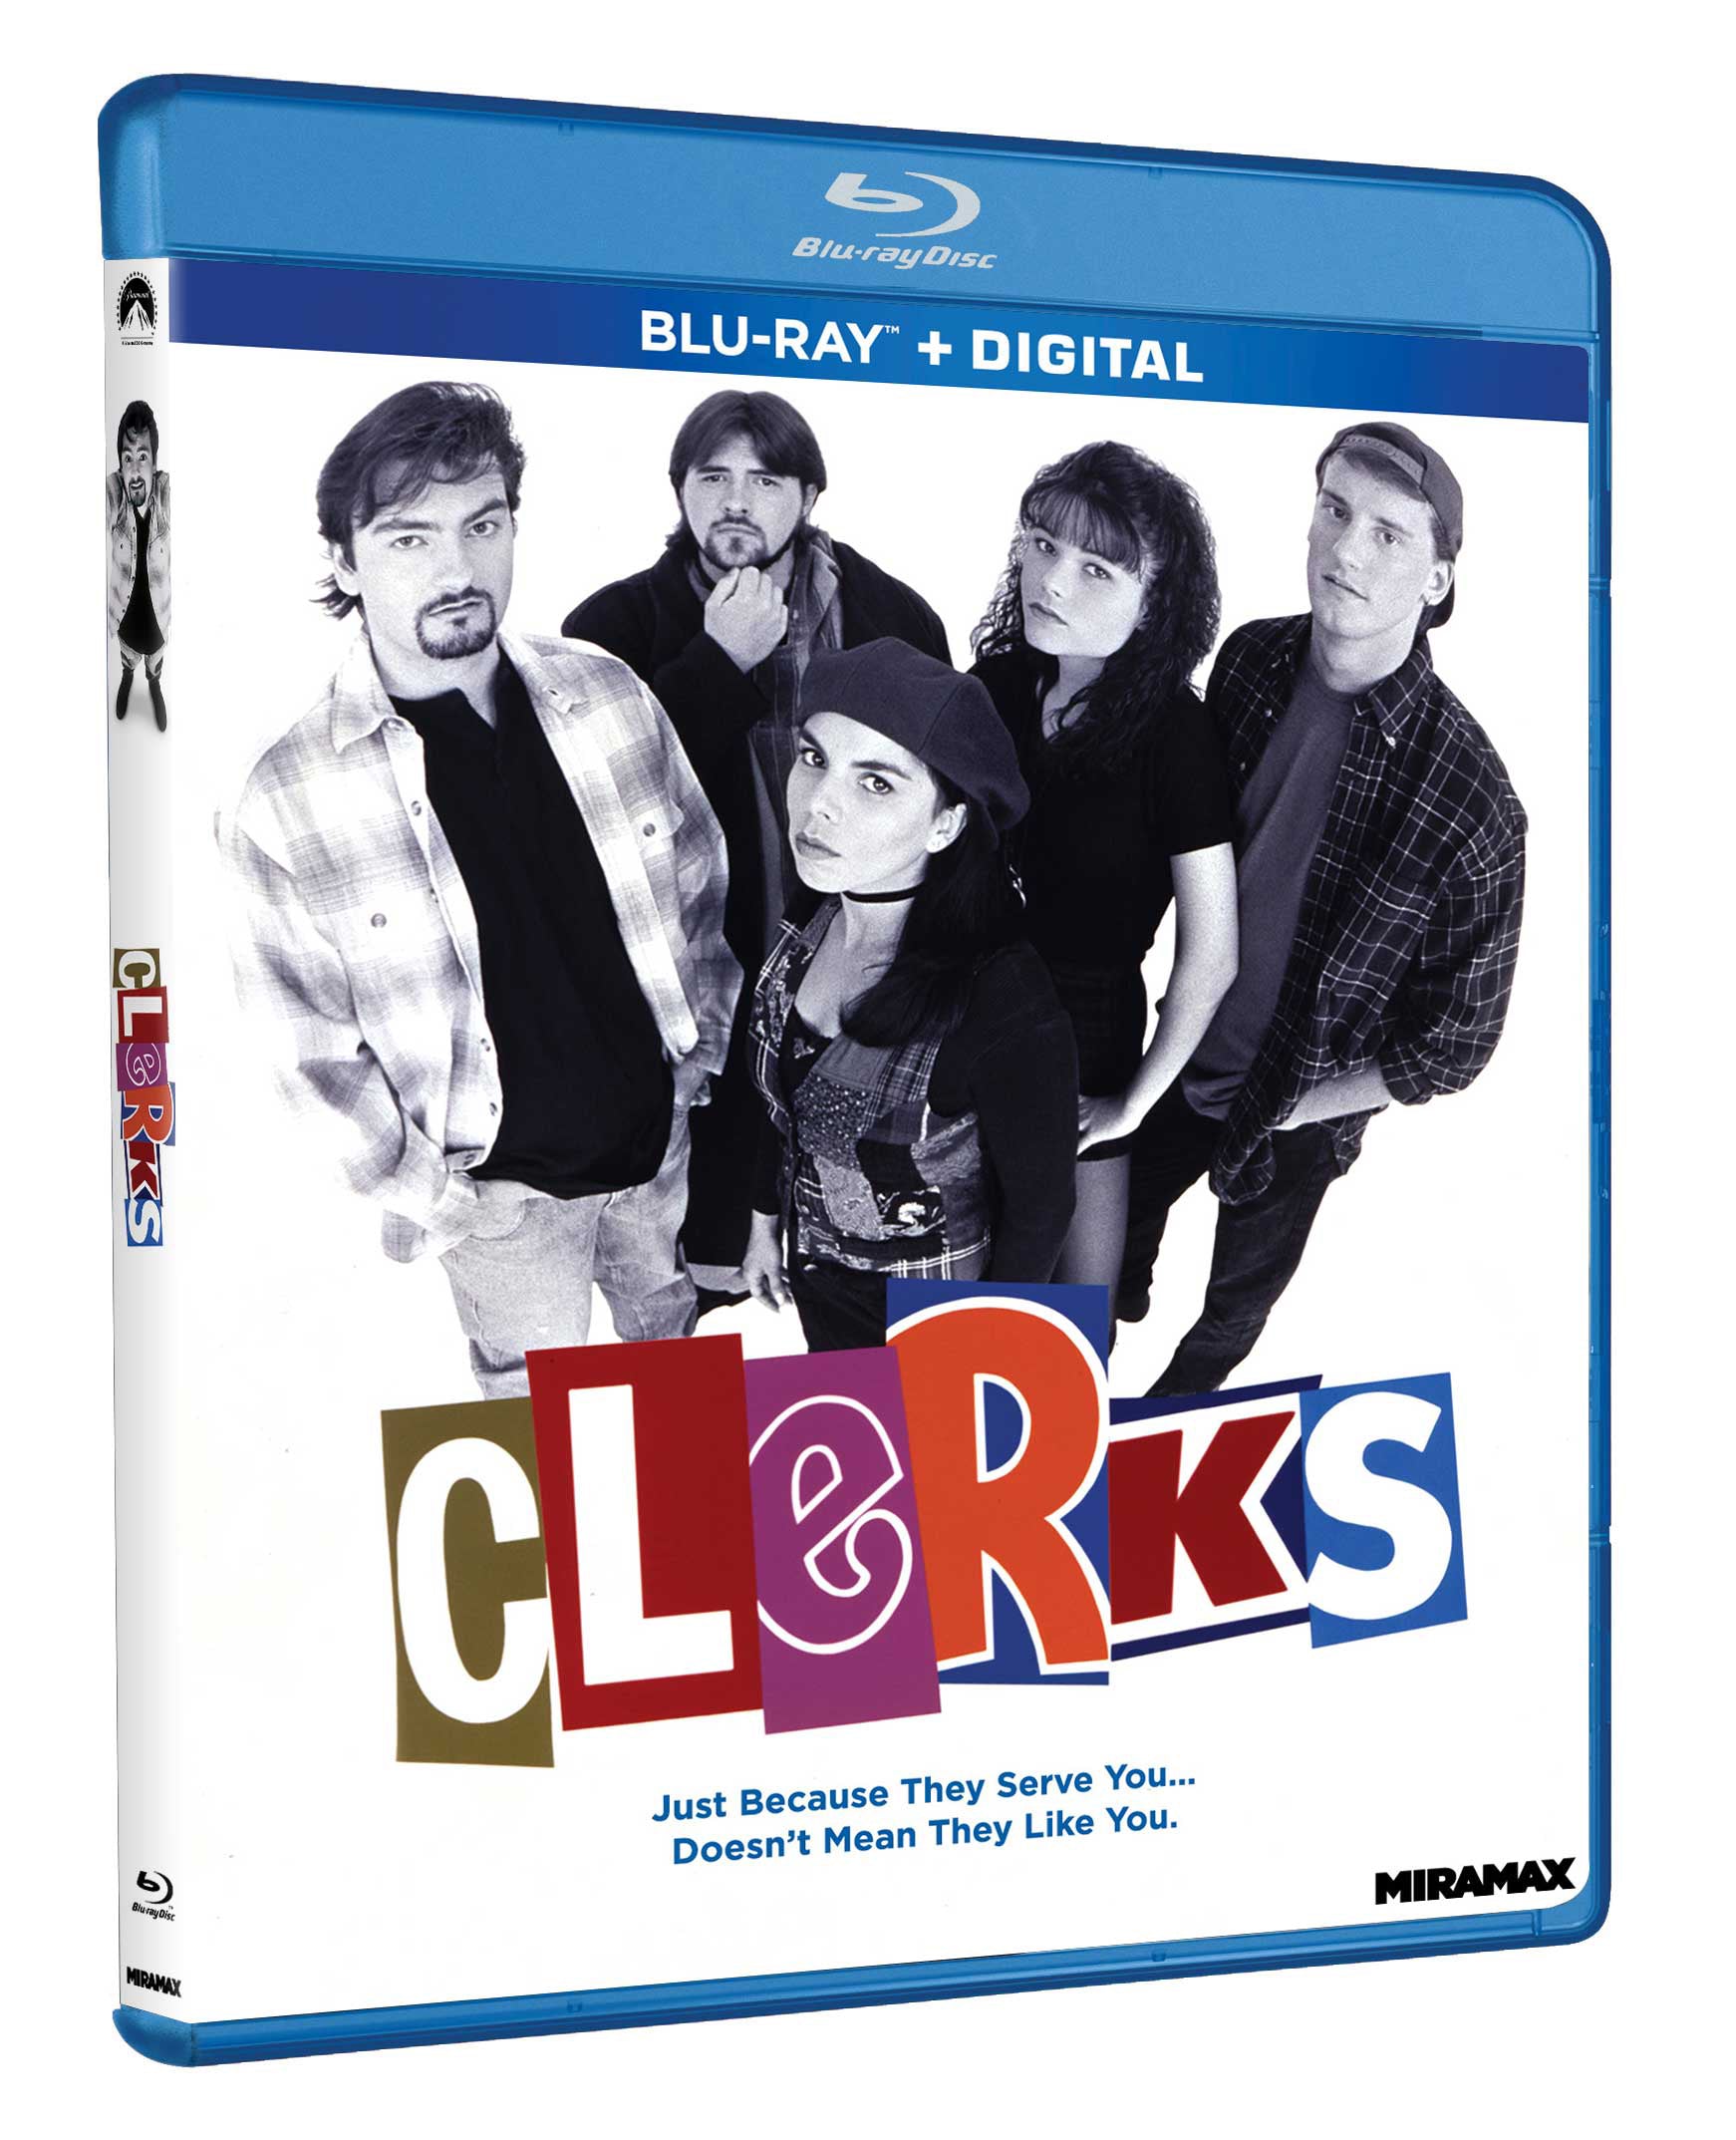 Clerks [Blu-ray] cover art